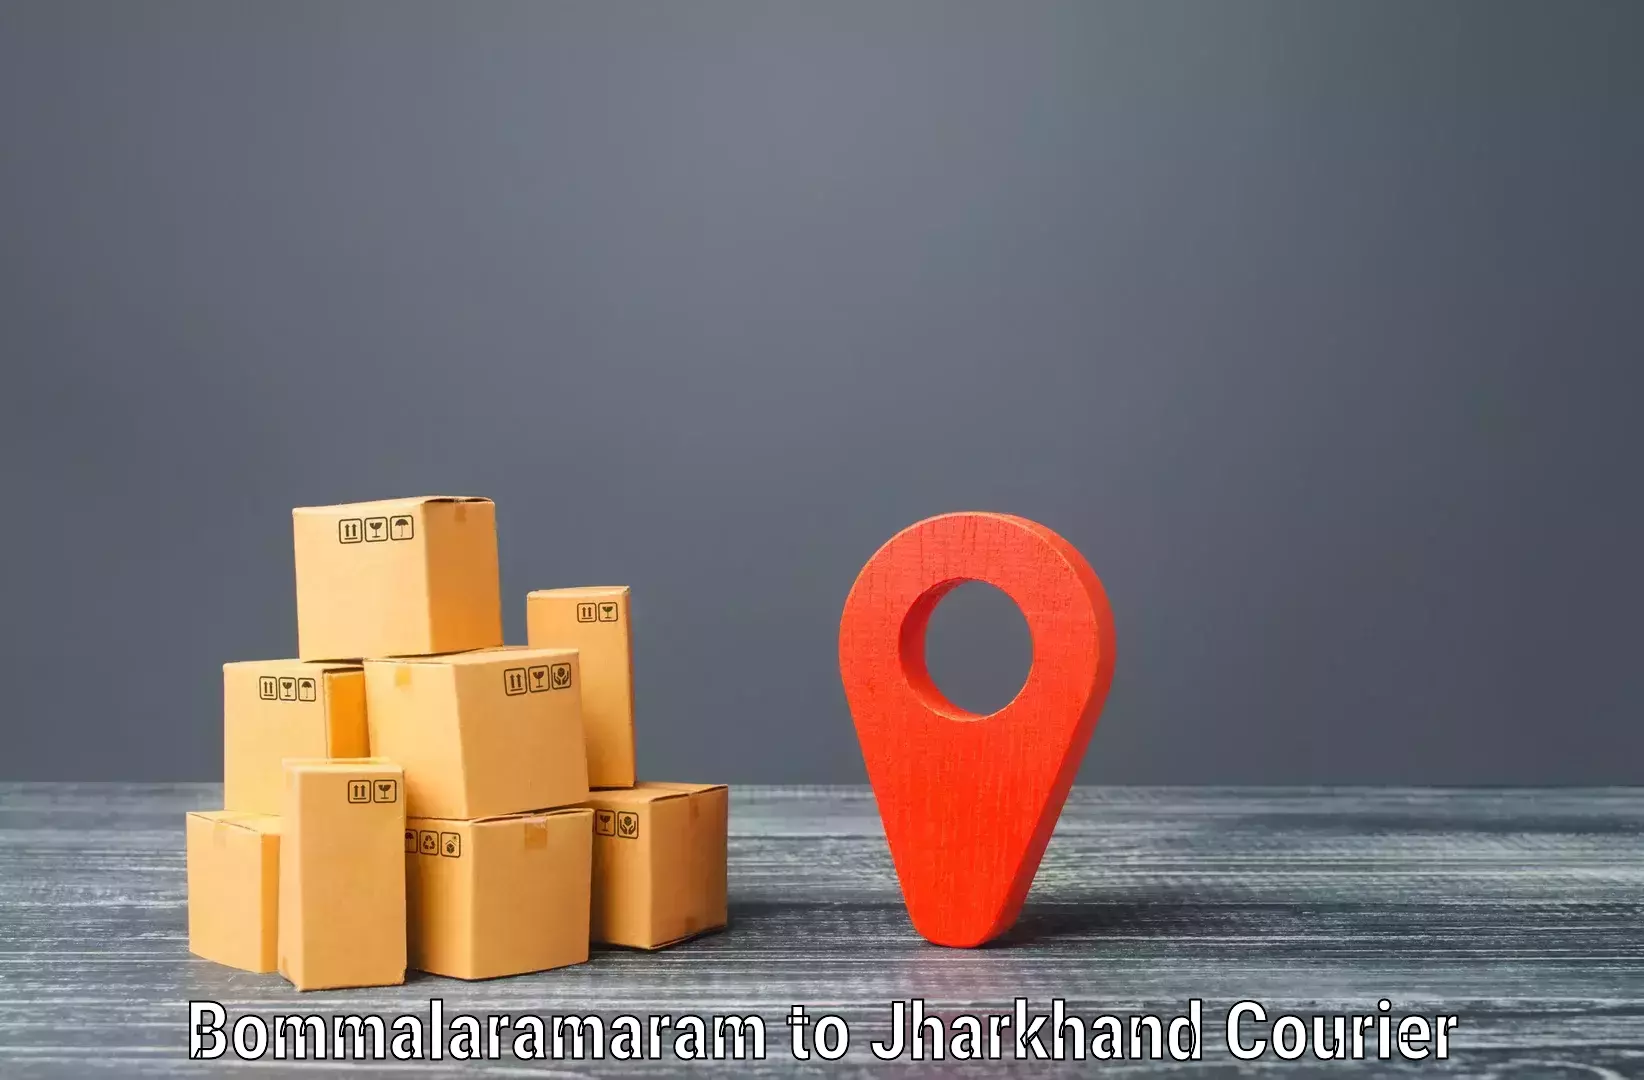 Tech-enabled shipping Bommalaramaram to Dhanbad